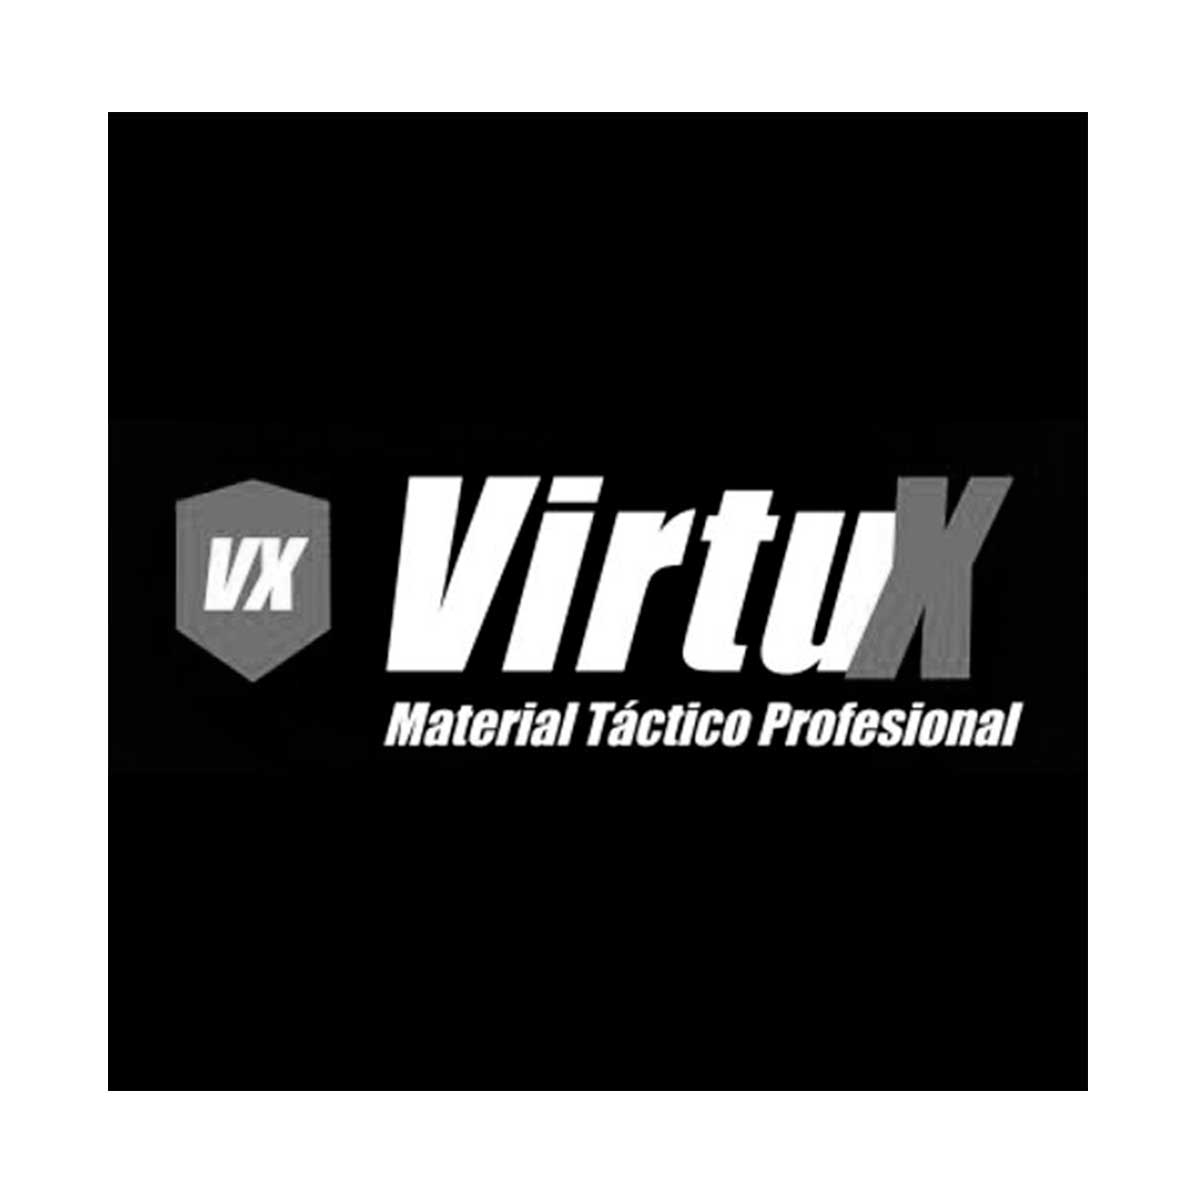 Virtux